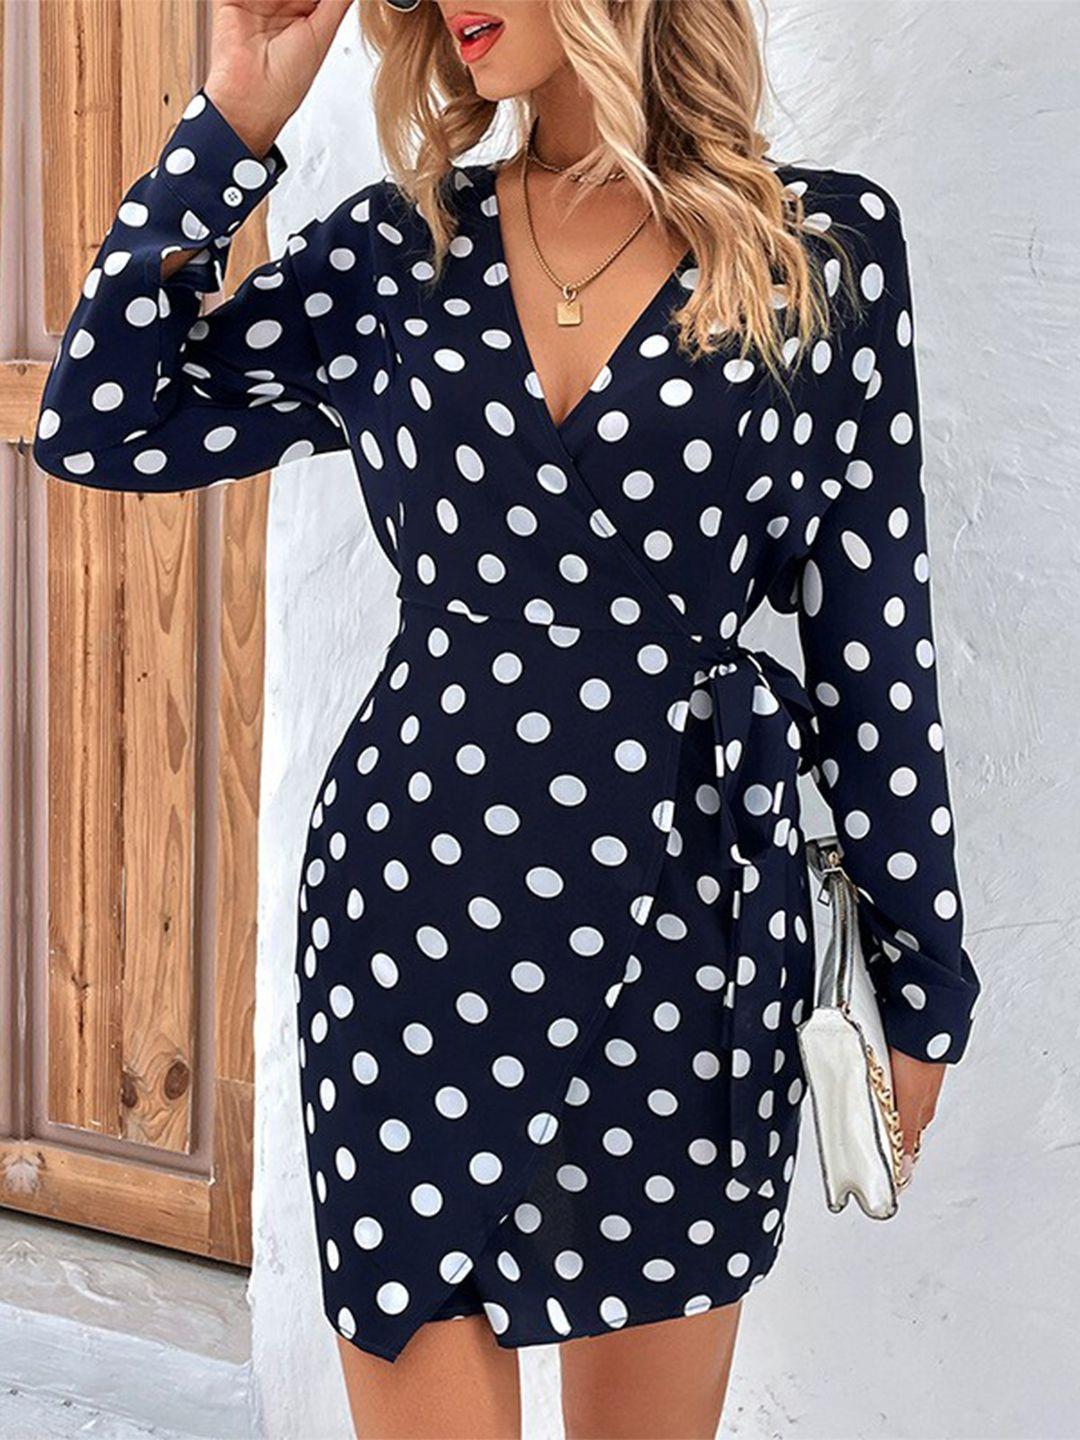 stylecast navy blue polka dots printed cuffed sleeves wrap dress